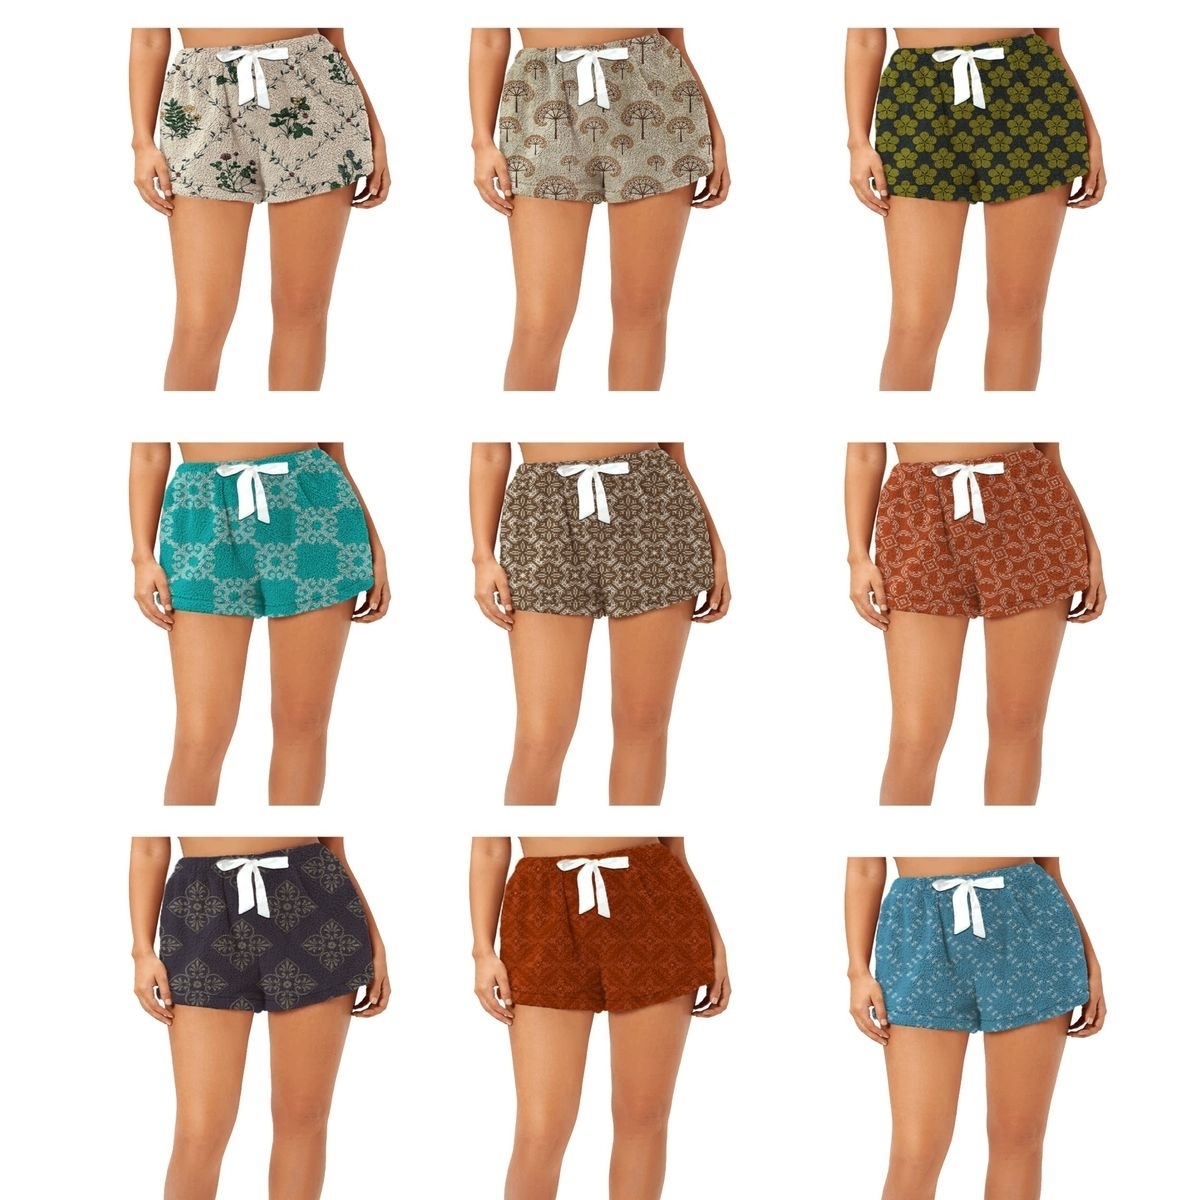 5-Pack: Women's Ultra Plush Micro-Fleece Soft Printed Pajama Shorts - Medium, Shape